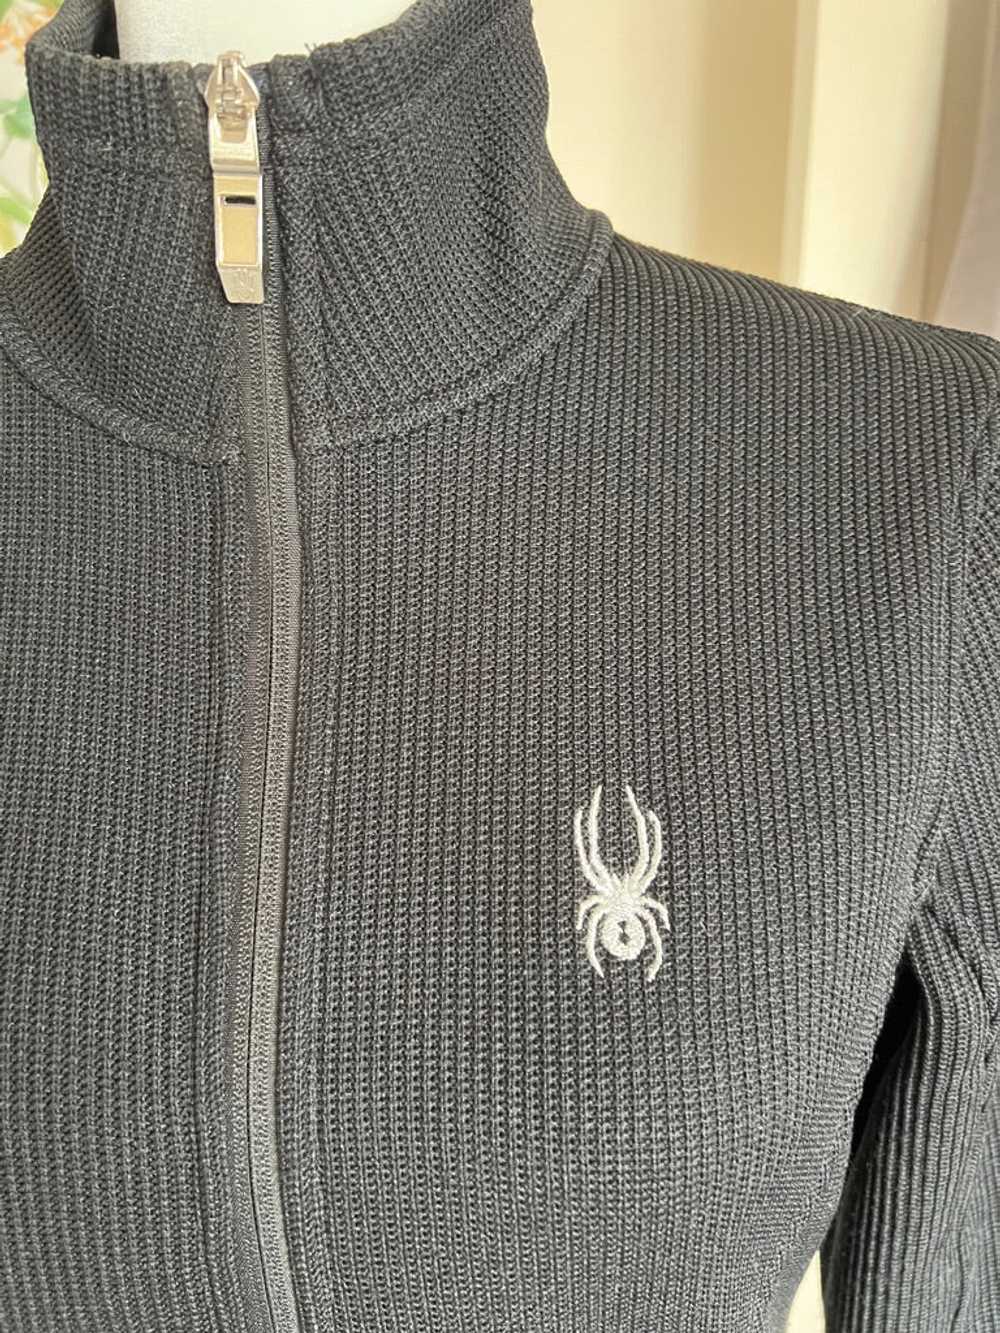 Spyder Black Zipper Core Sweater Jacket, M - image 6